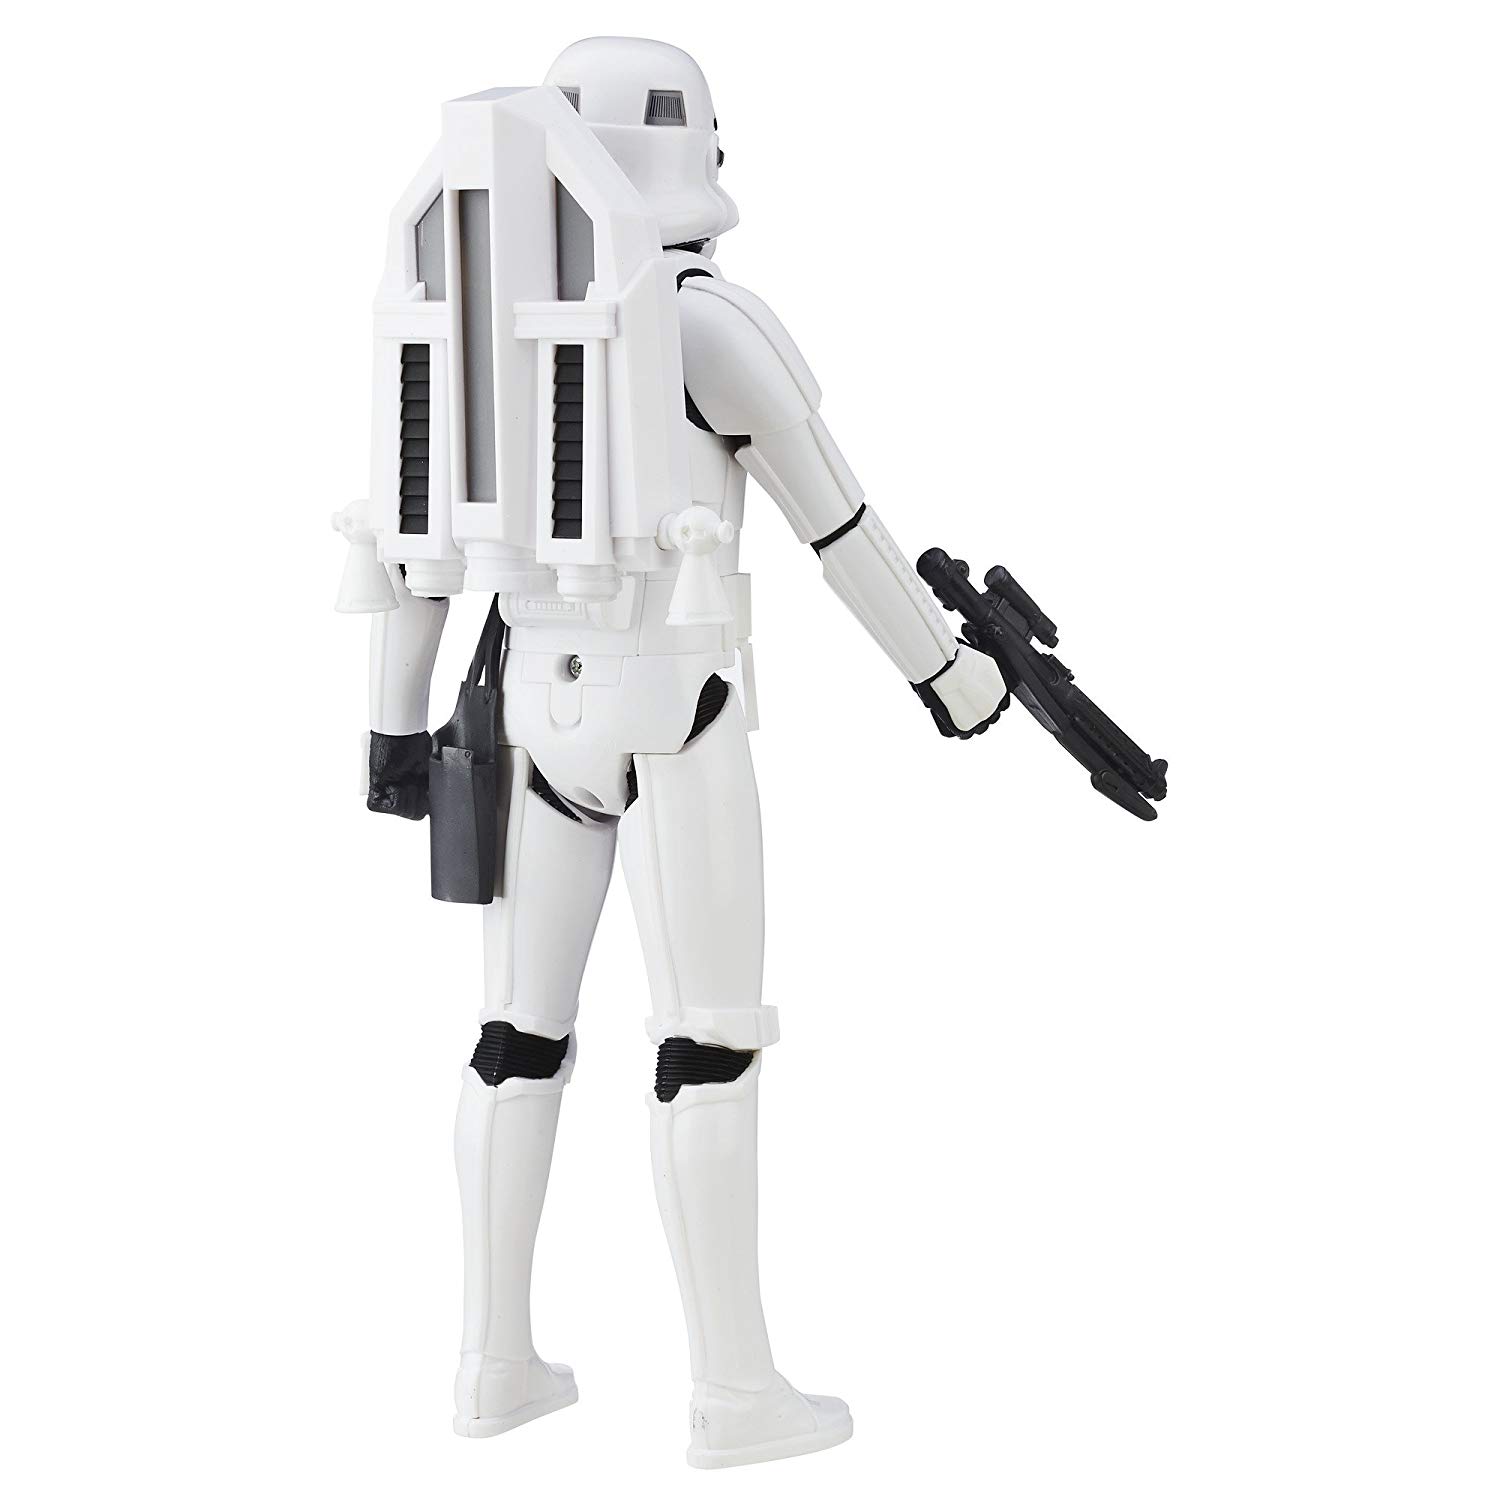 Star Wars Interactech Imperial Stormtrooper Figure - image 2 of 5